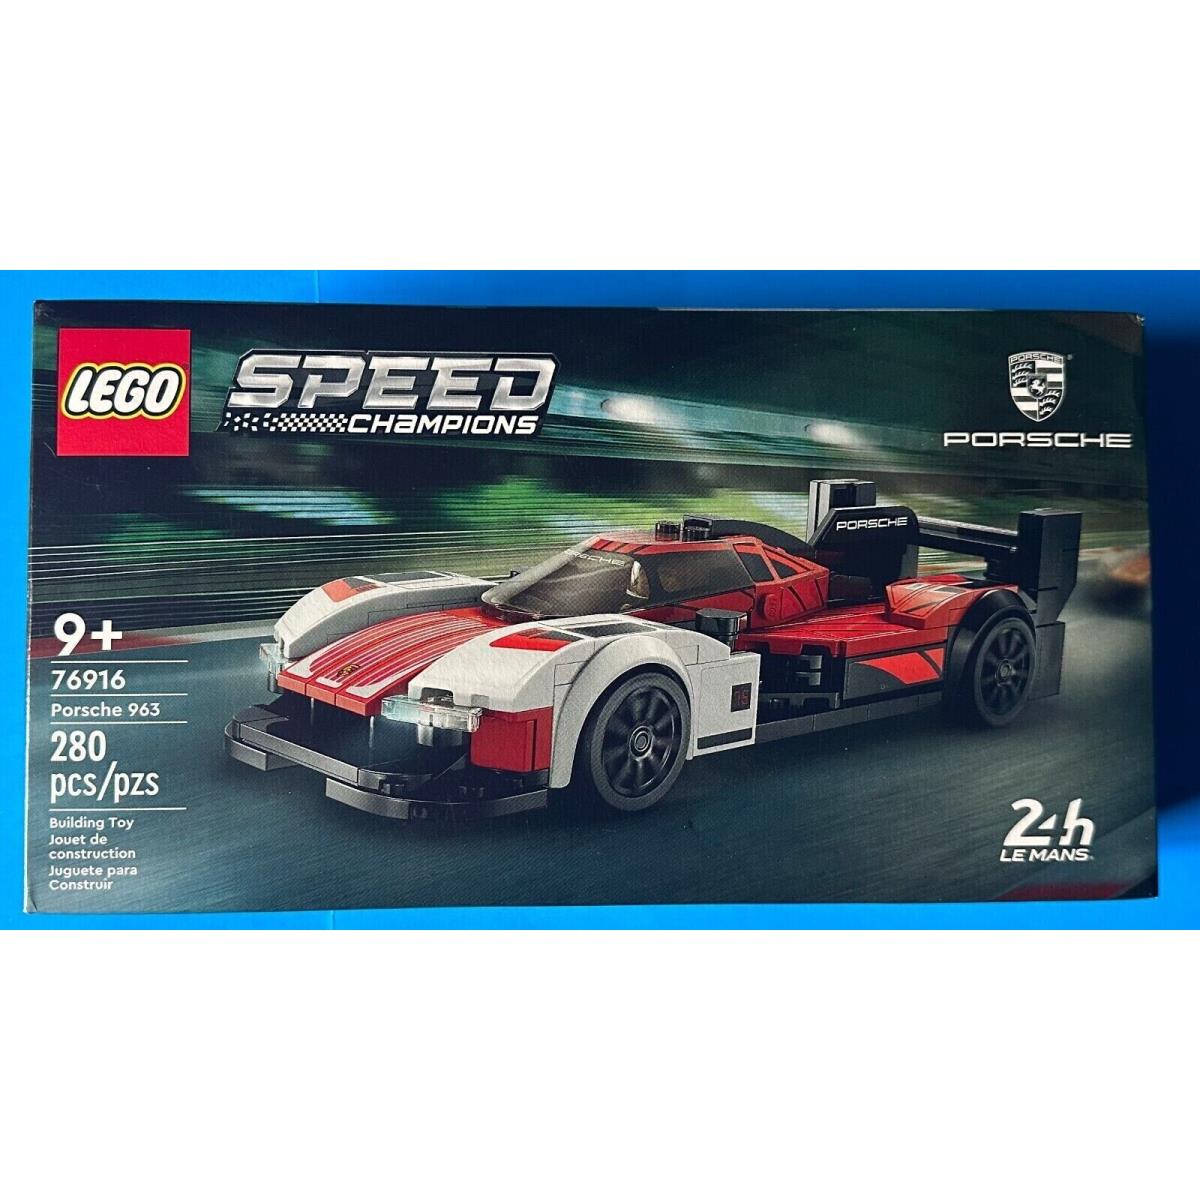 Lego Speed Champions: Porsche 963 76916 Building Set